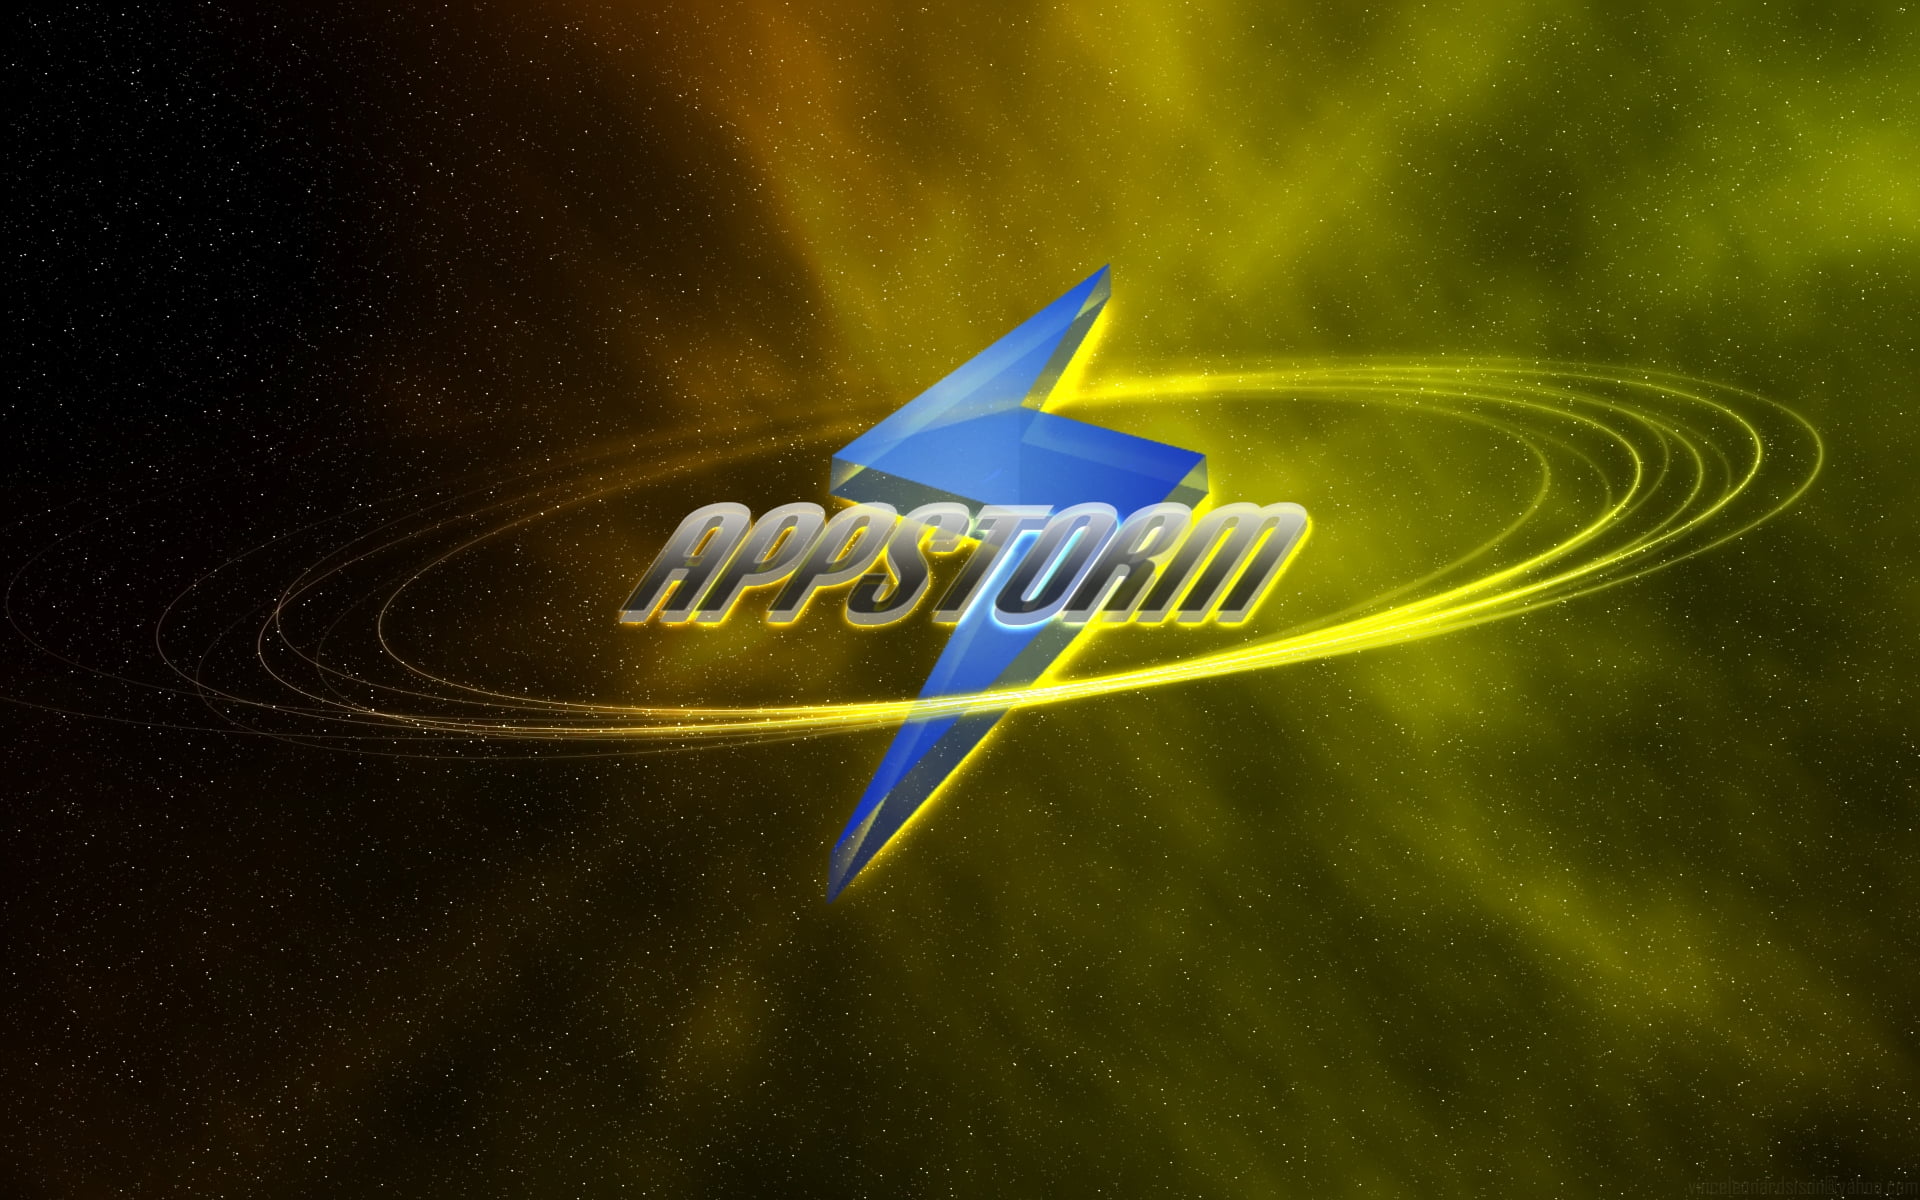 Appstorm logo